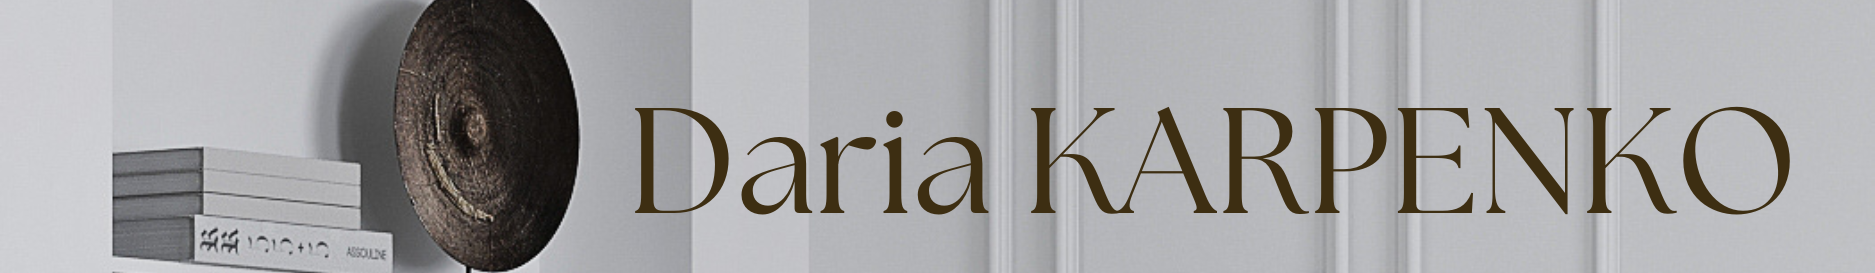 Daria KARPENKO REVIRON's profile banner